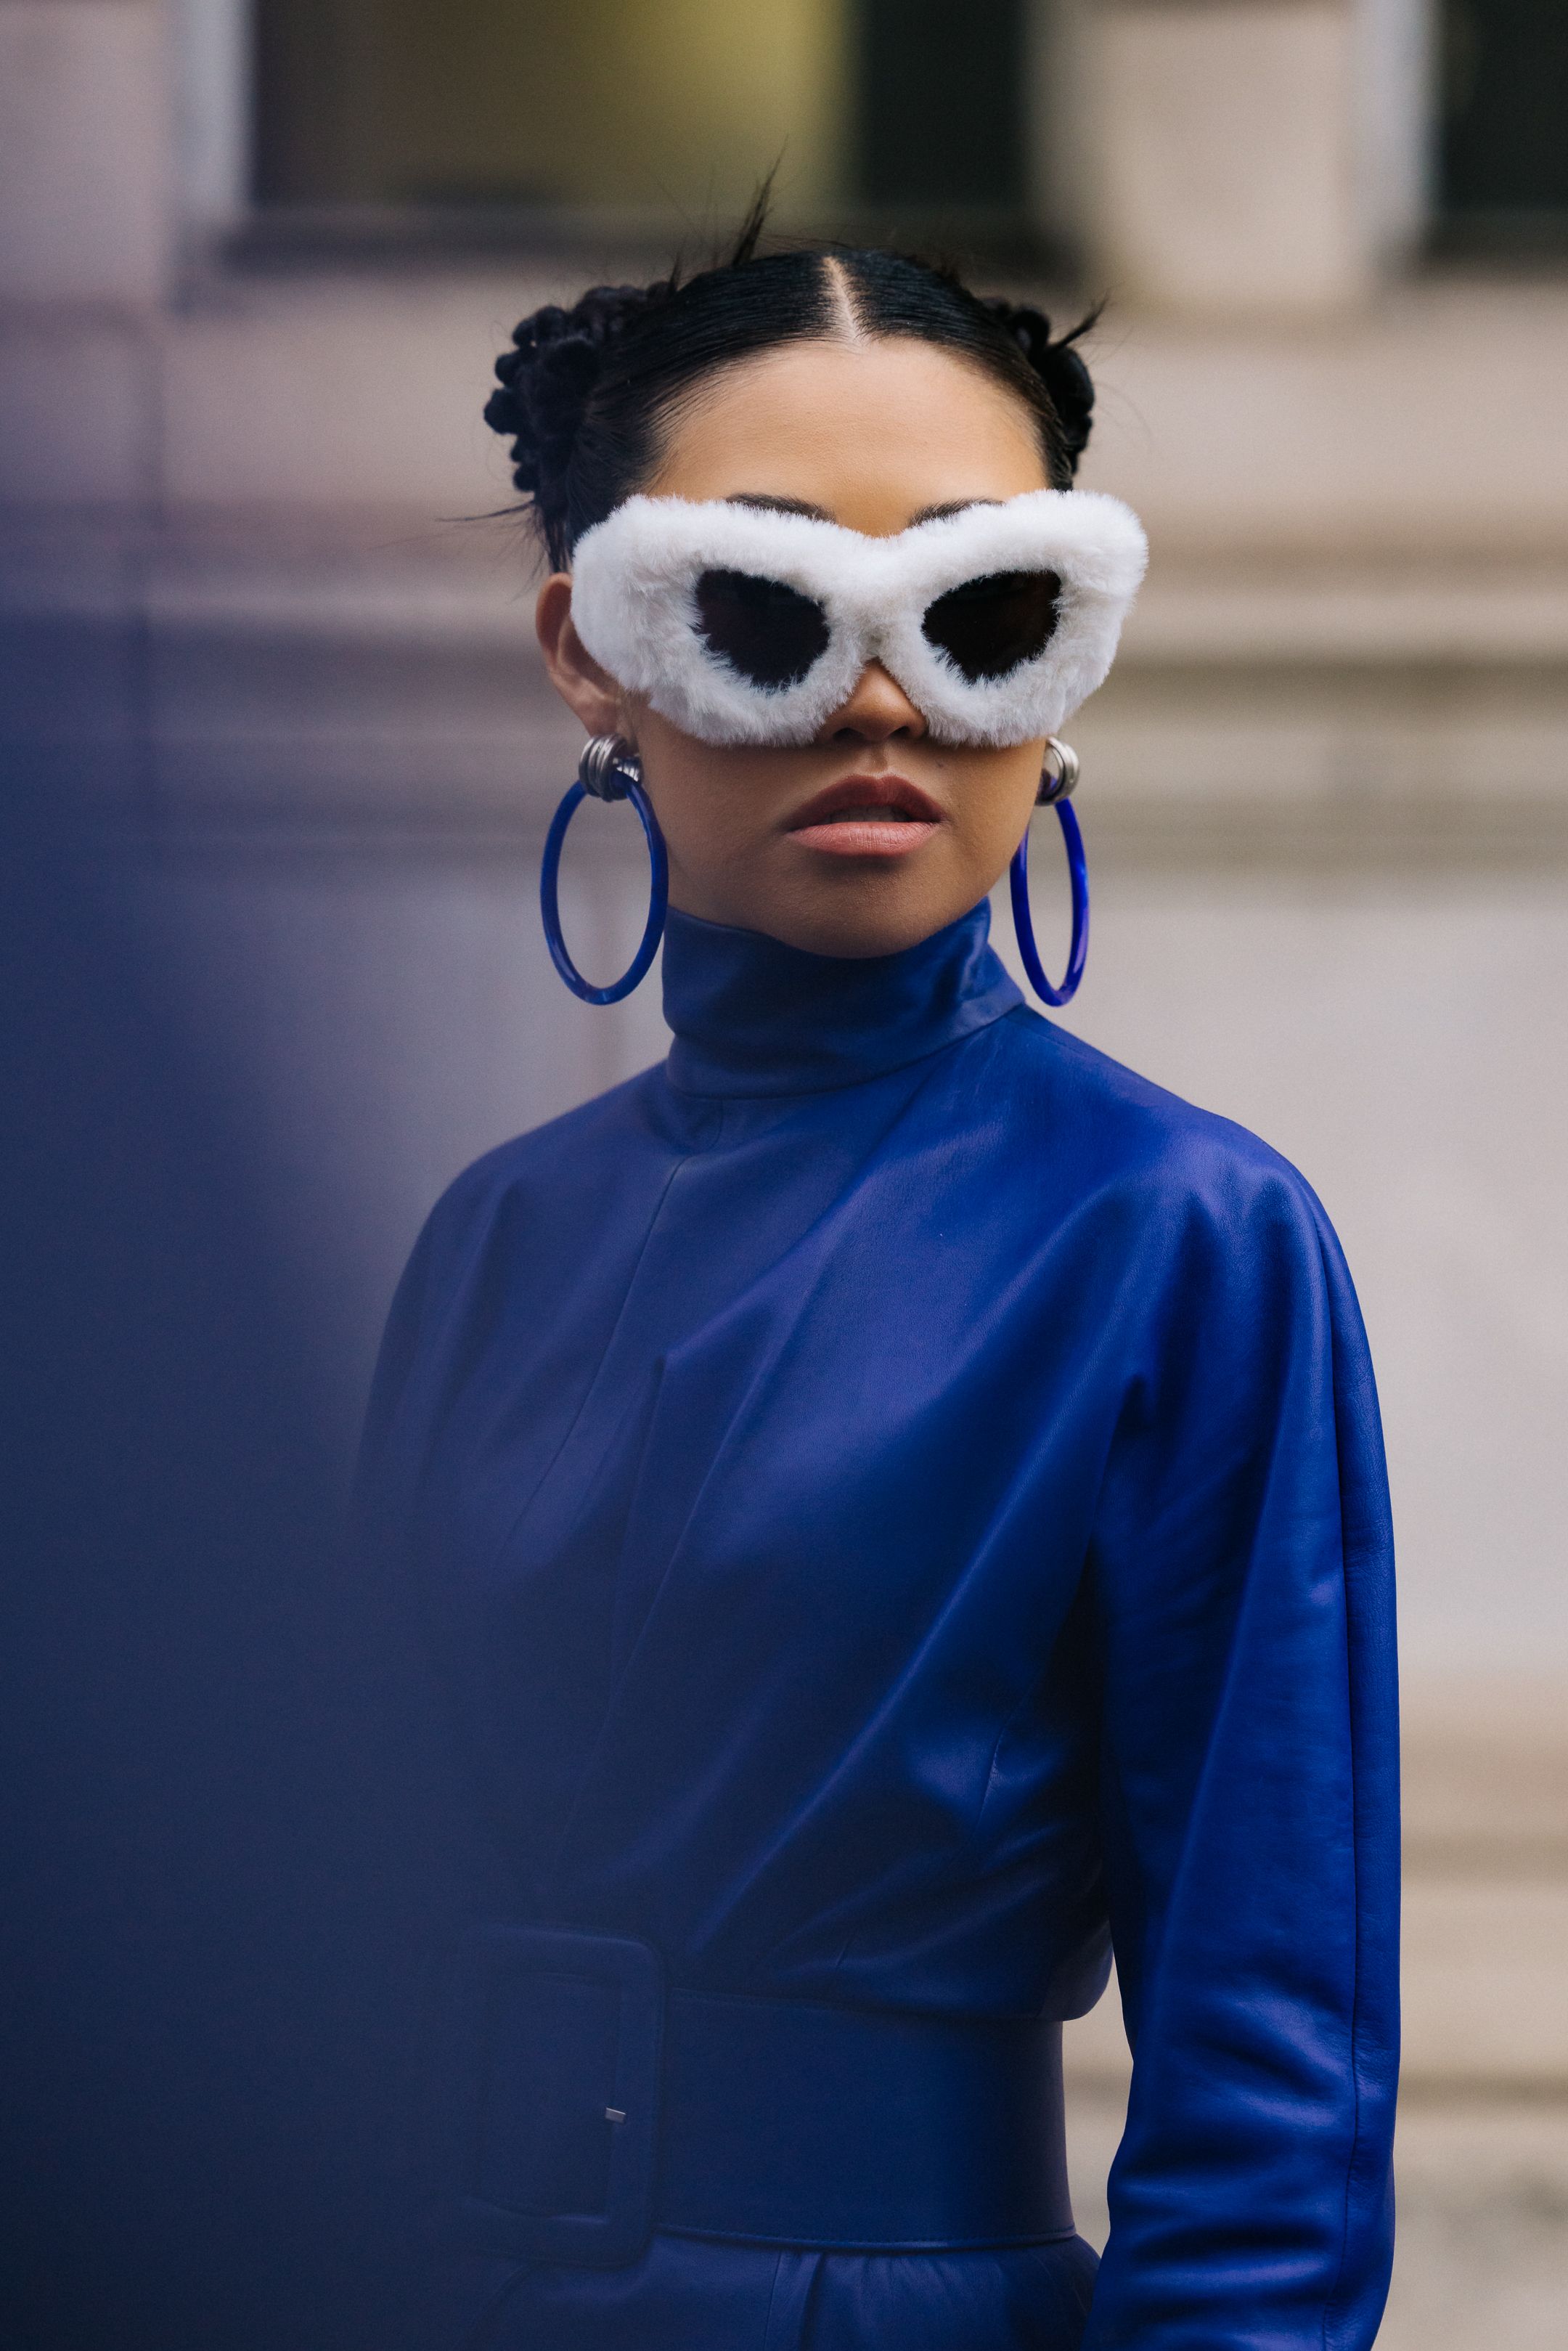 Paris Fashion Week 2022: Celebrity Street Style, Fashion